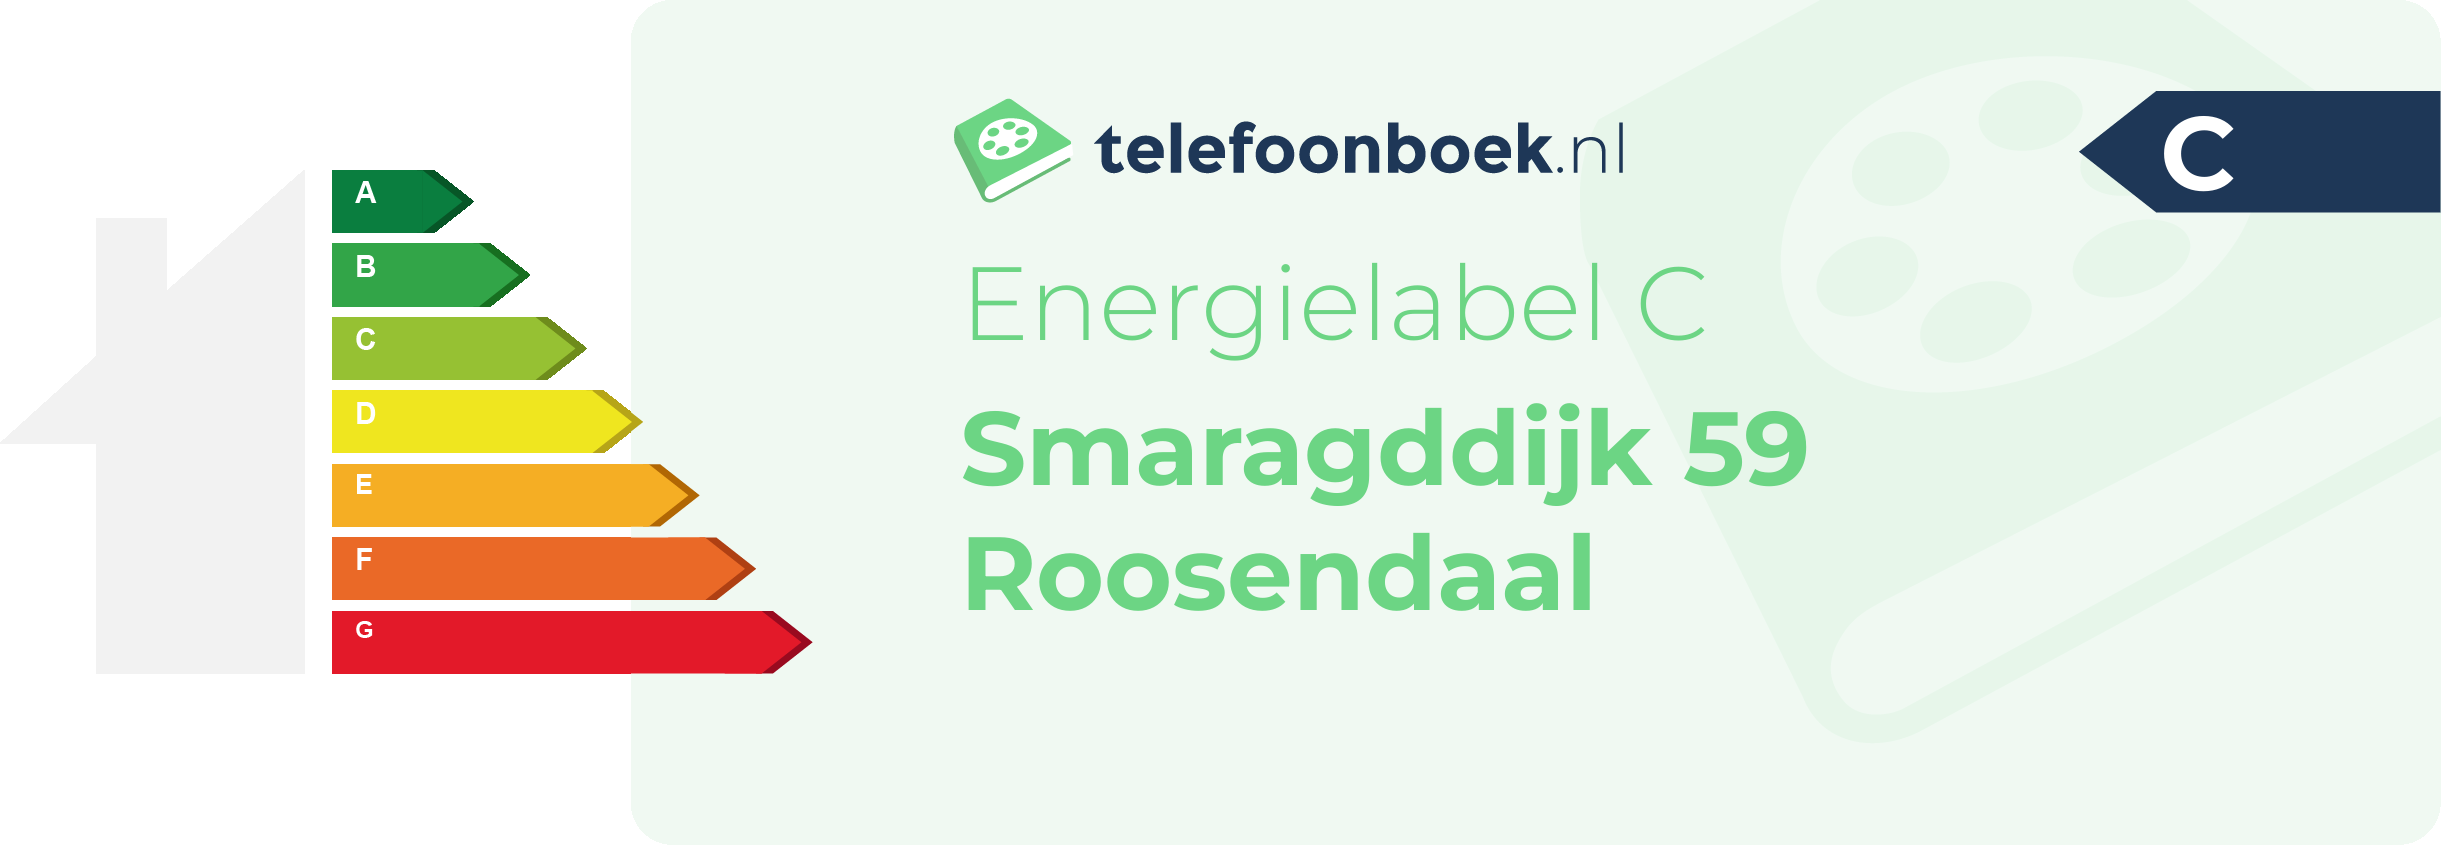 Energielabel Smaragddijk 59 Roosendaal